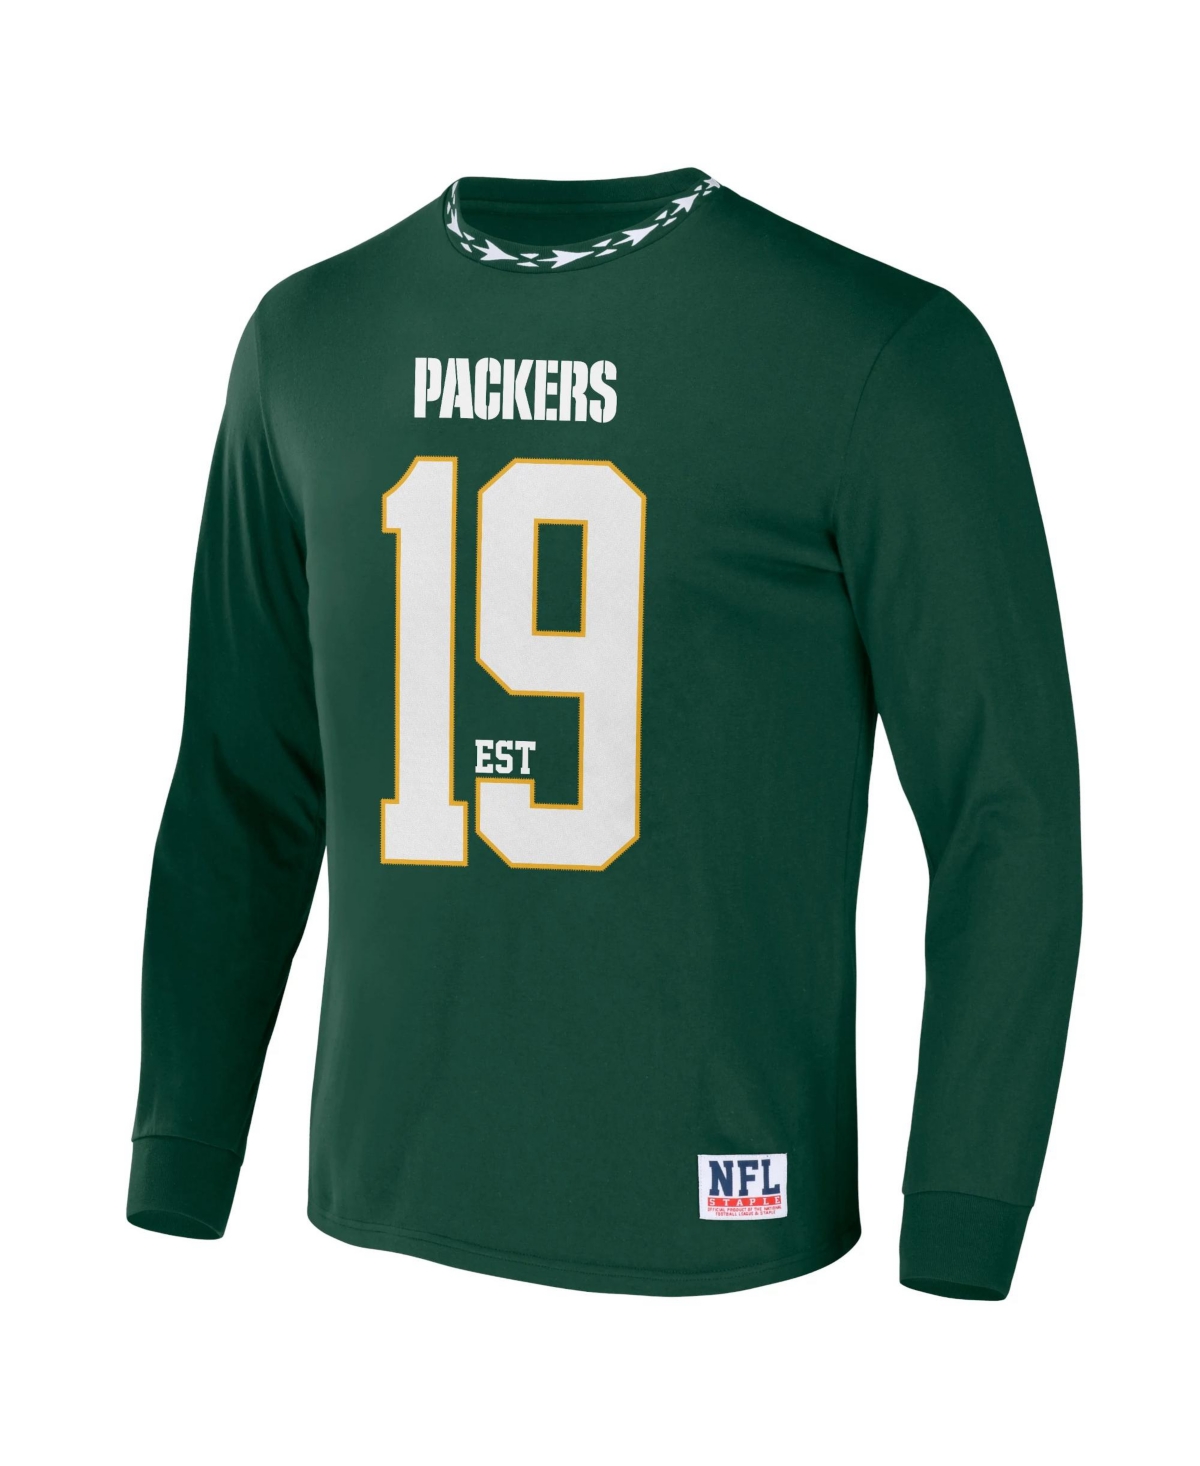 Shop Nfl Properties Men's Nfl X Staple Hunter Green Green Bay Packers Core Long Sleeve Jersey Style T-shirt